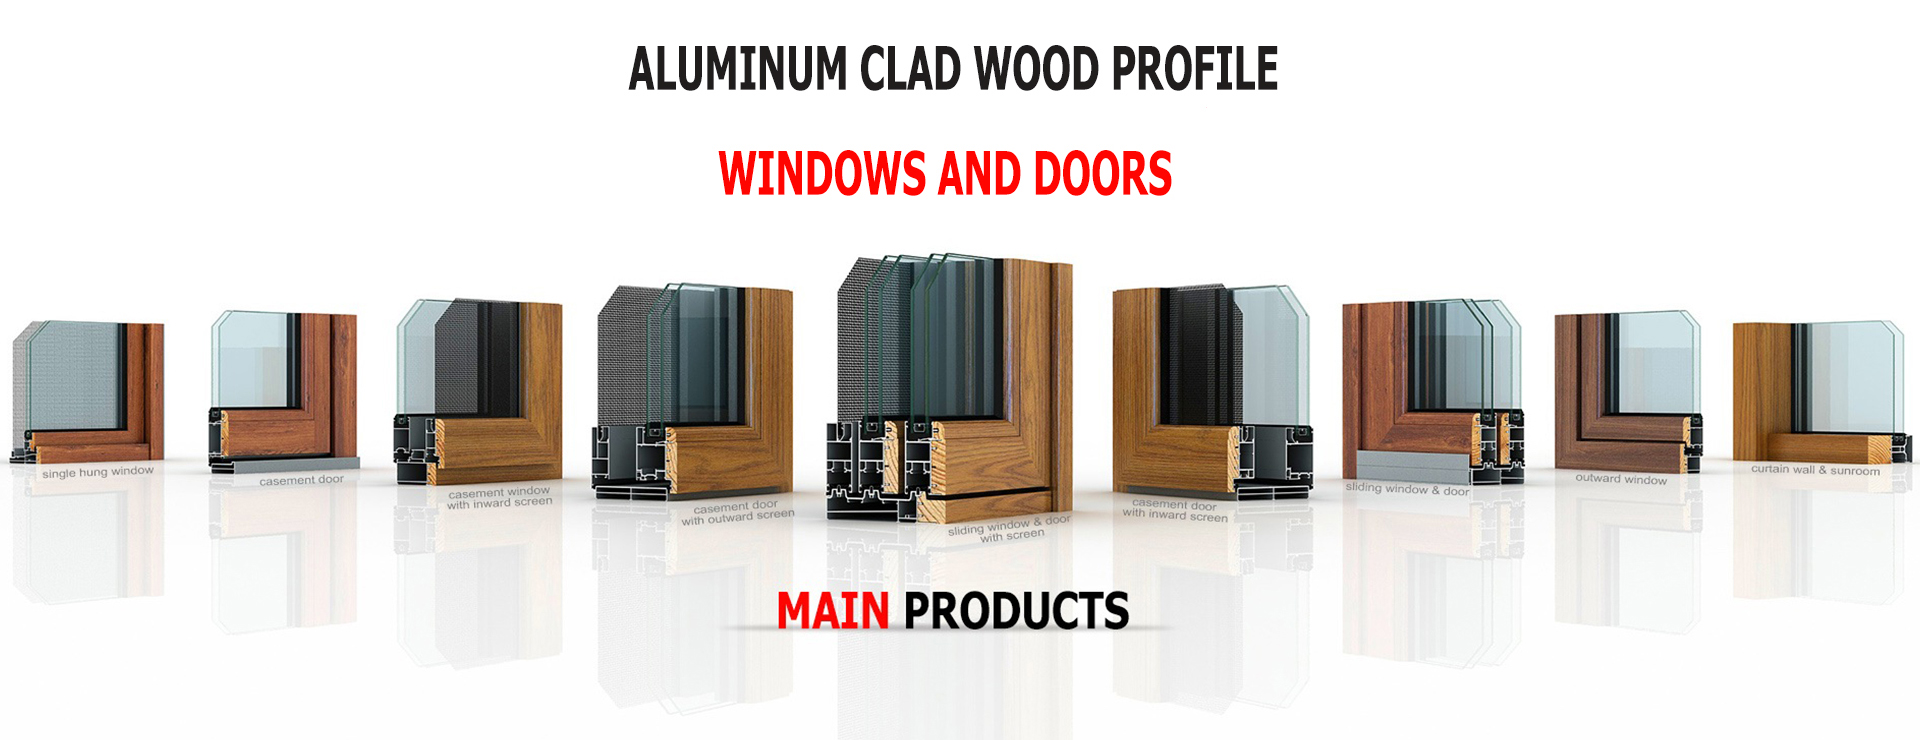 Aluminum Clad Wood Windows & Doors